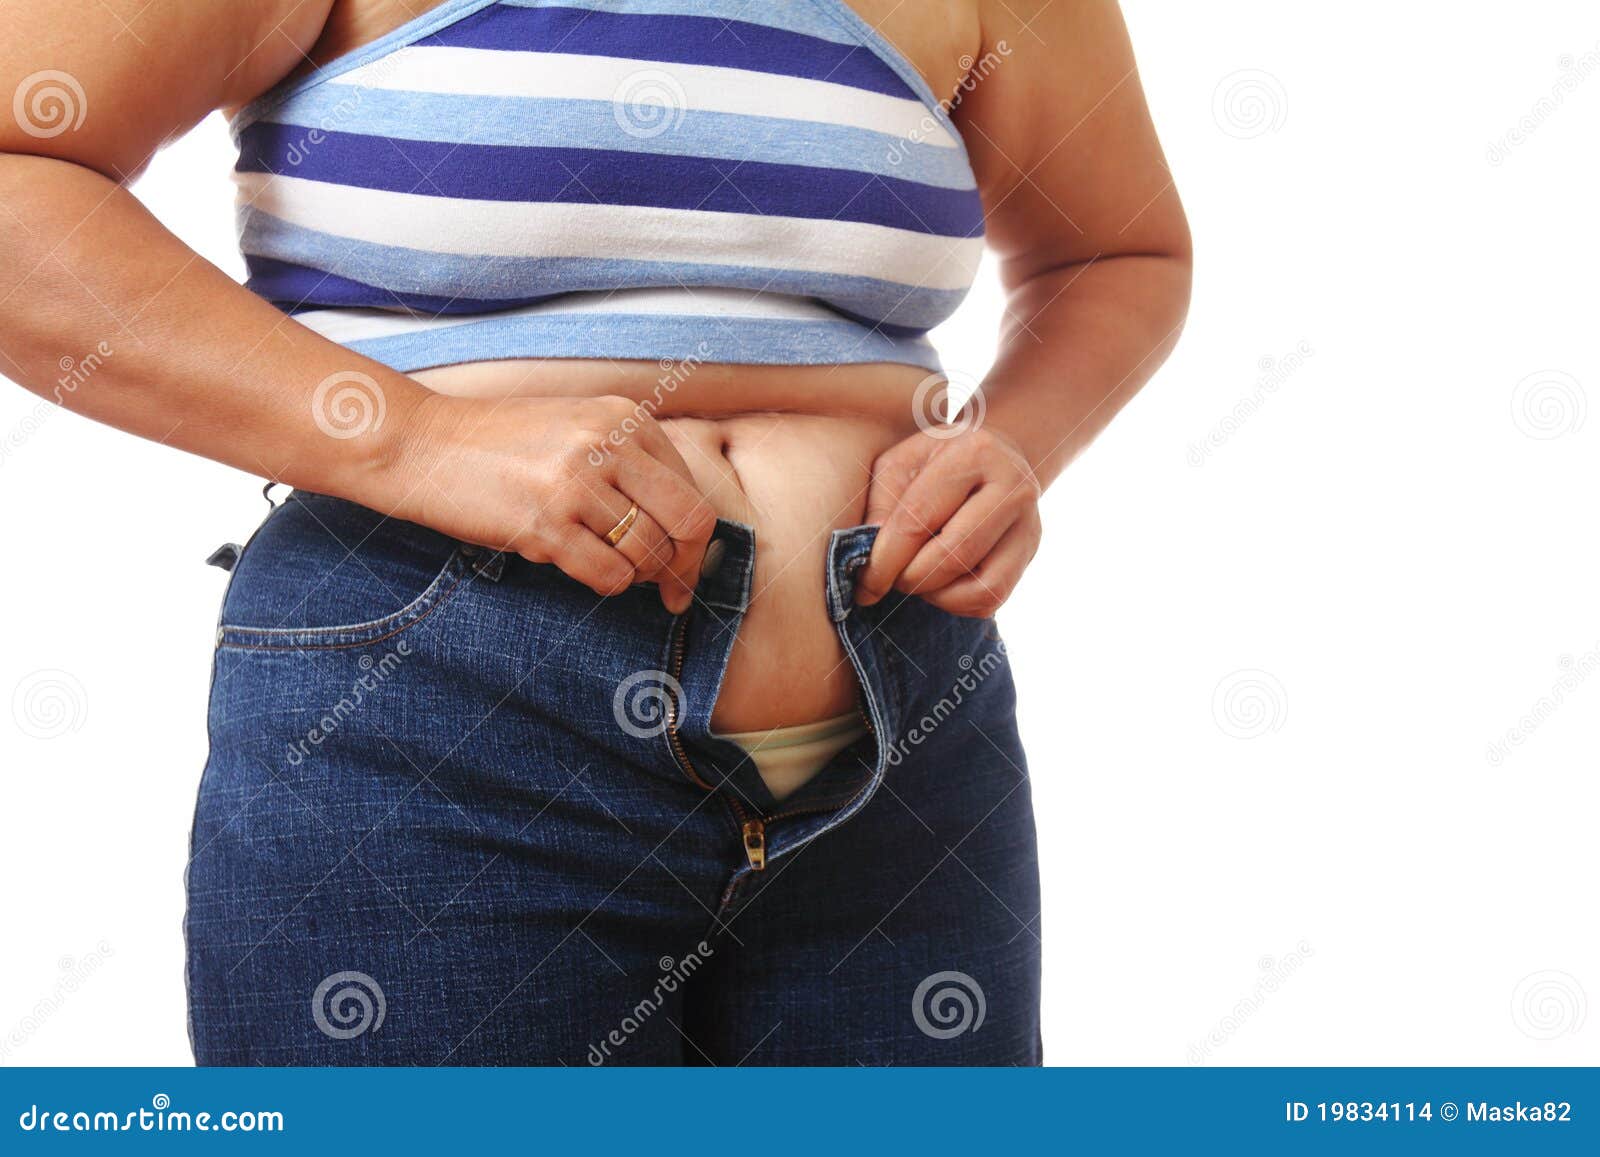 Fat Woman Foto